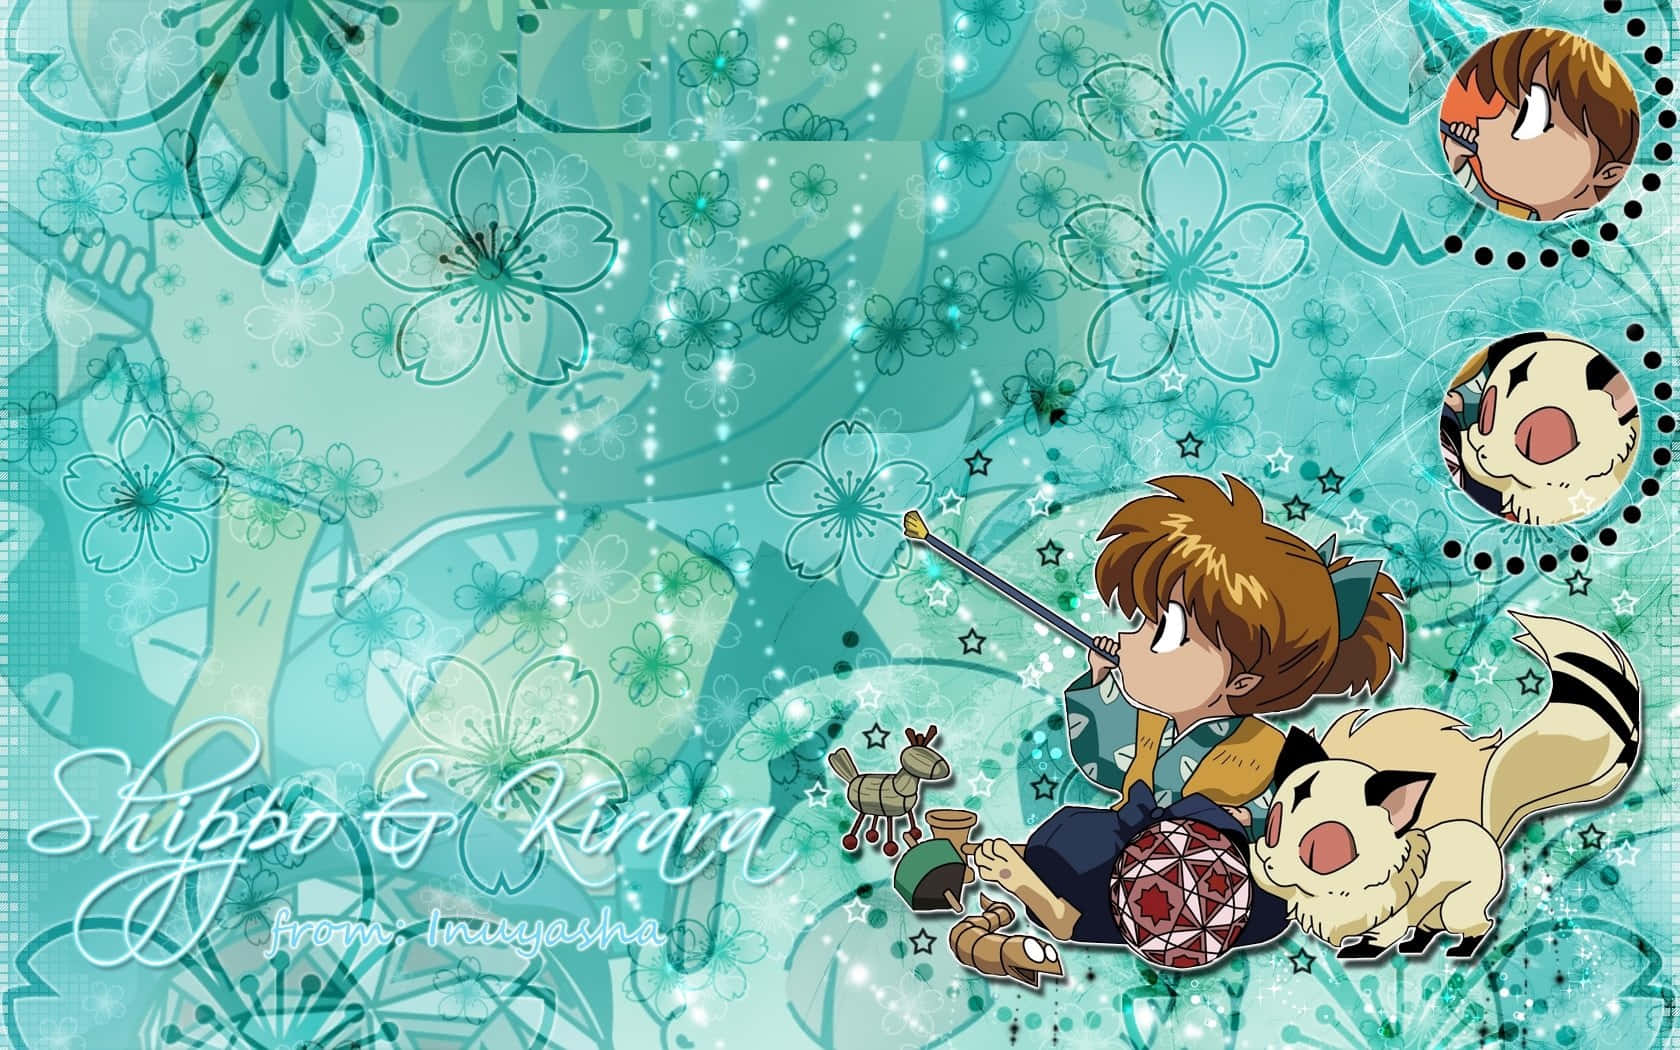 Caption: Kirara - The Adorable Magical Mascot Wallpaper